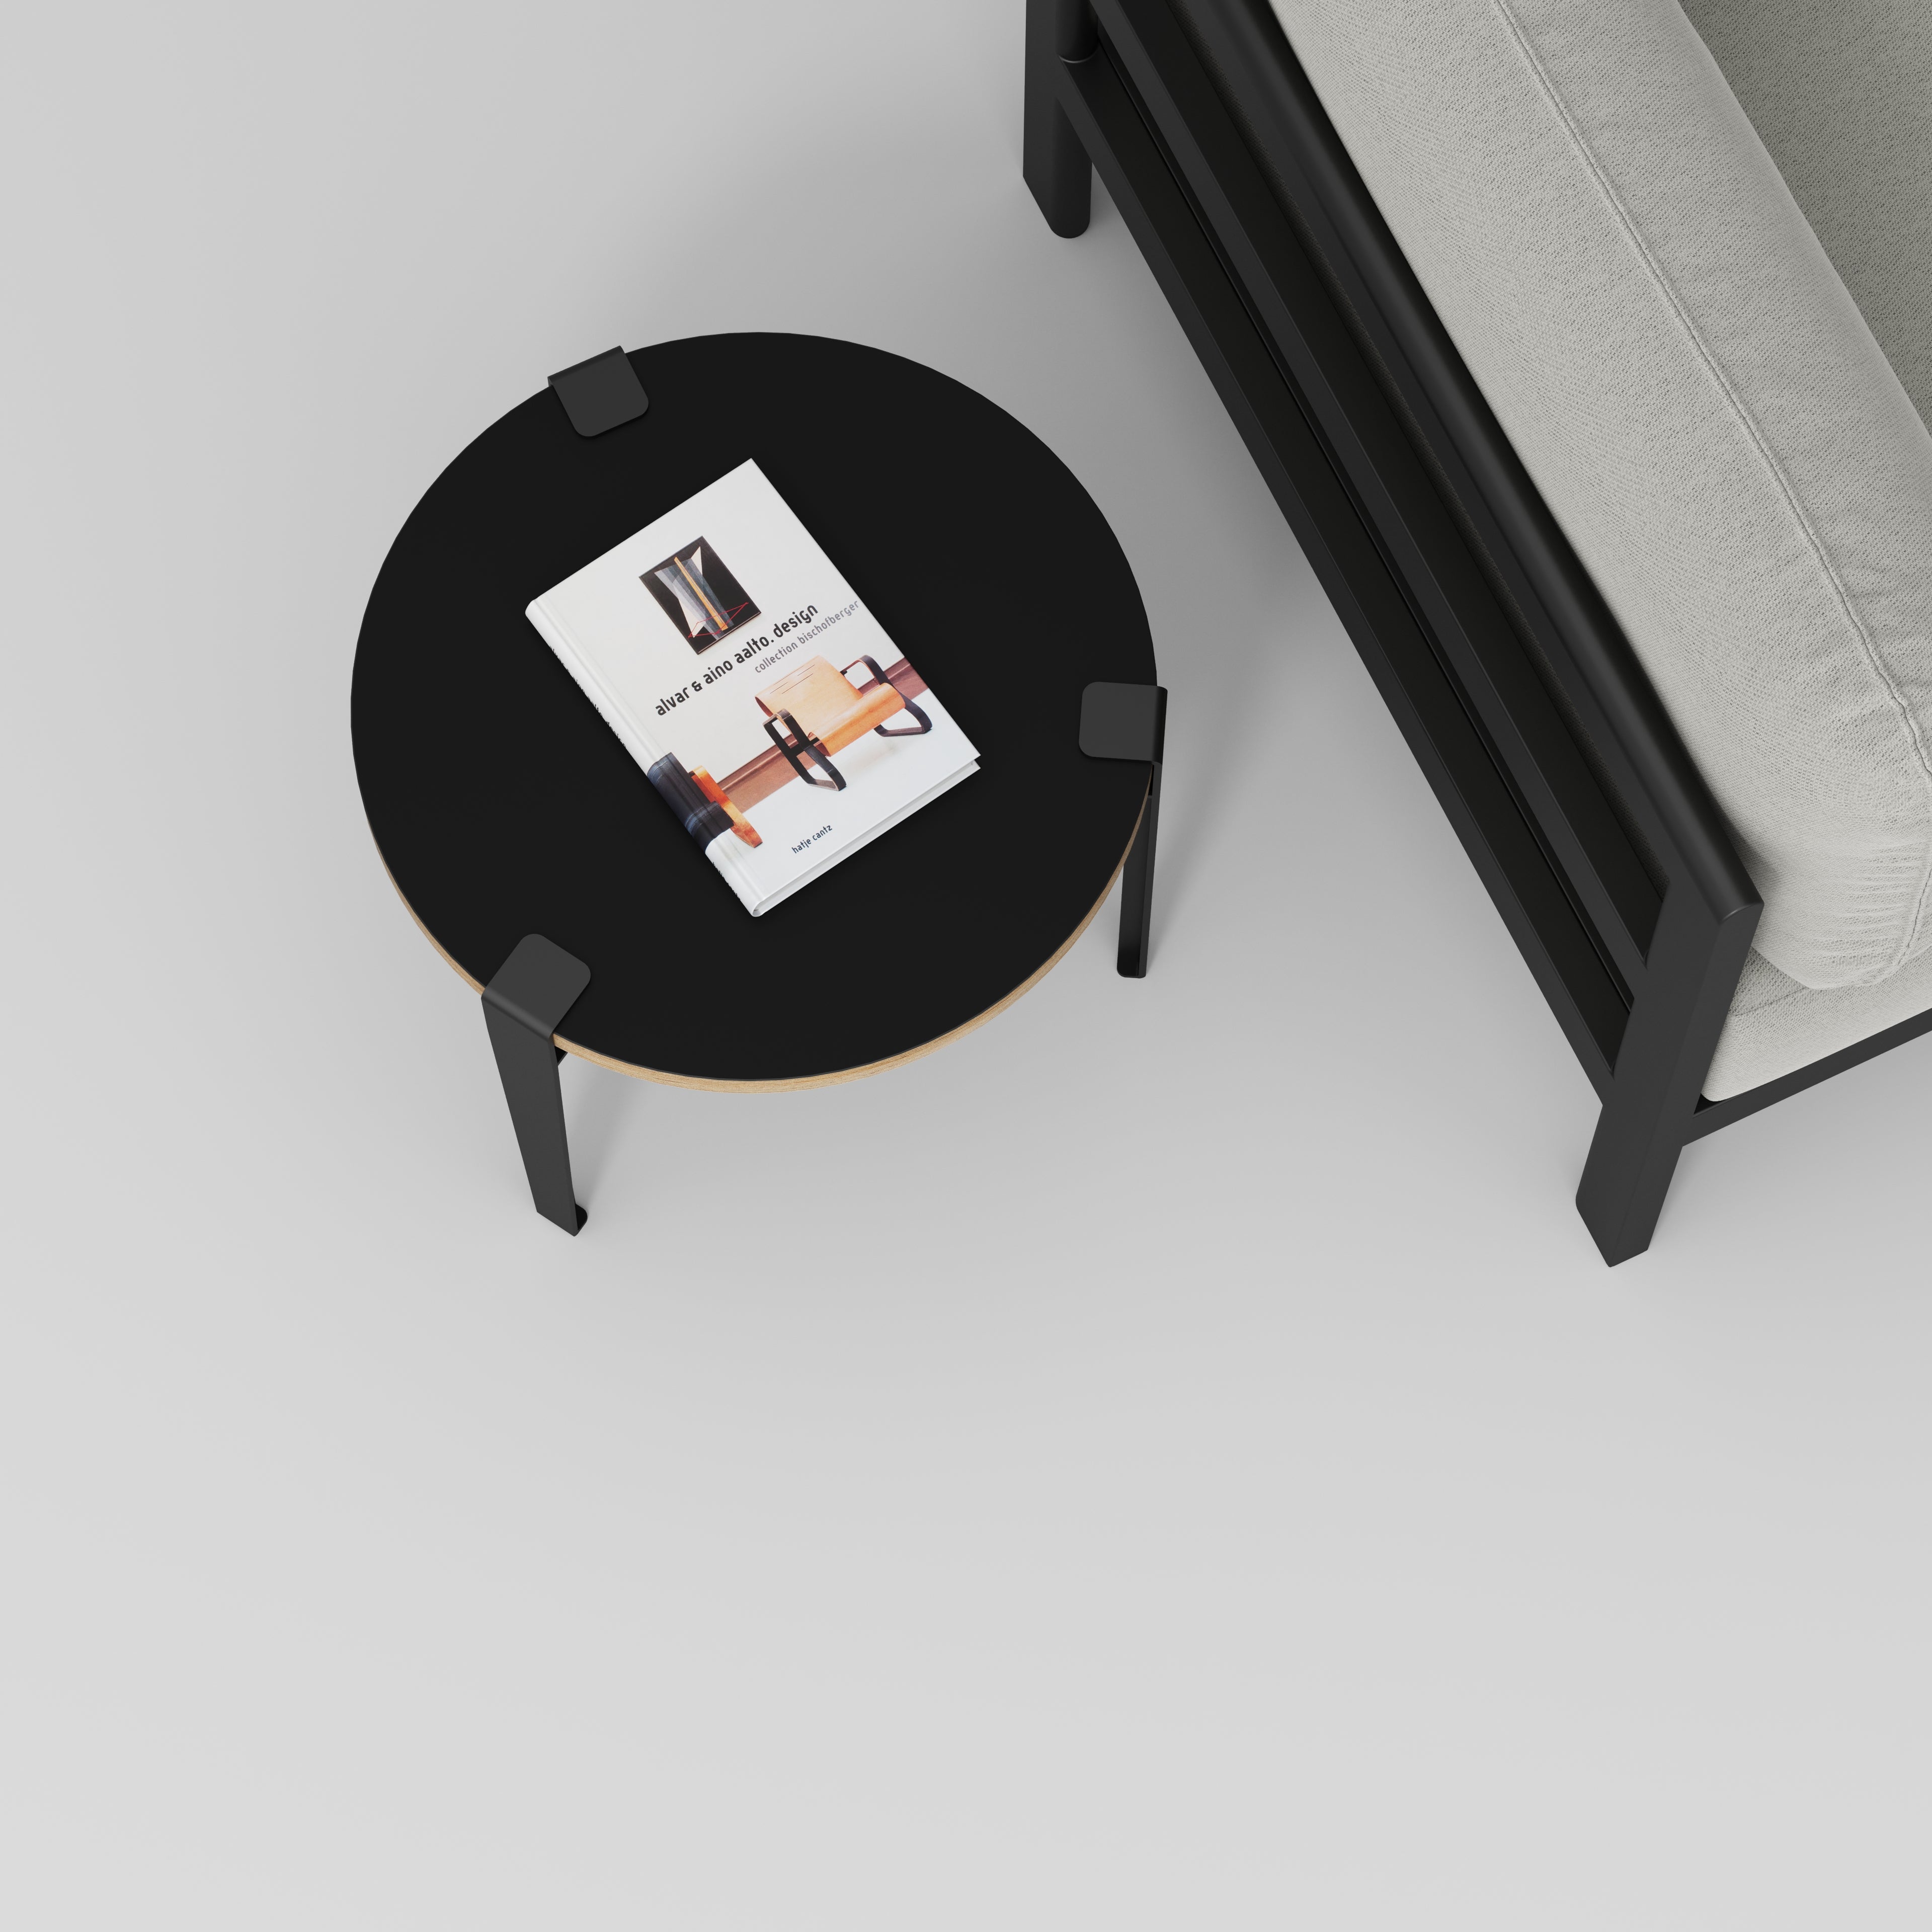 Round Side Table with Black Tiptoe Legs - Formica Diamond Black - 500(dia) x 430(h)